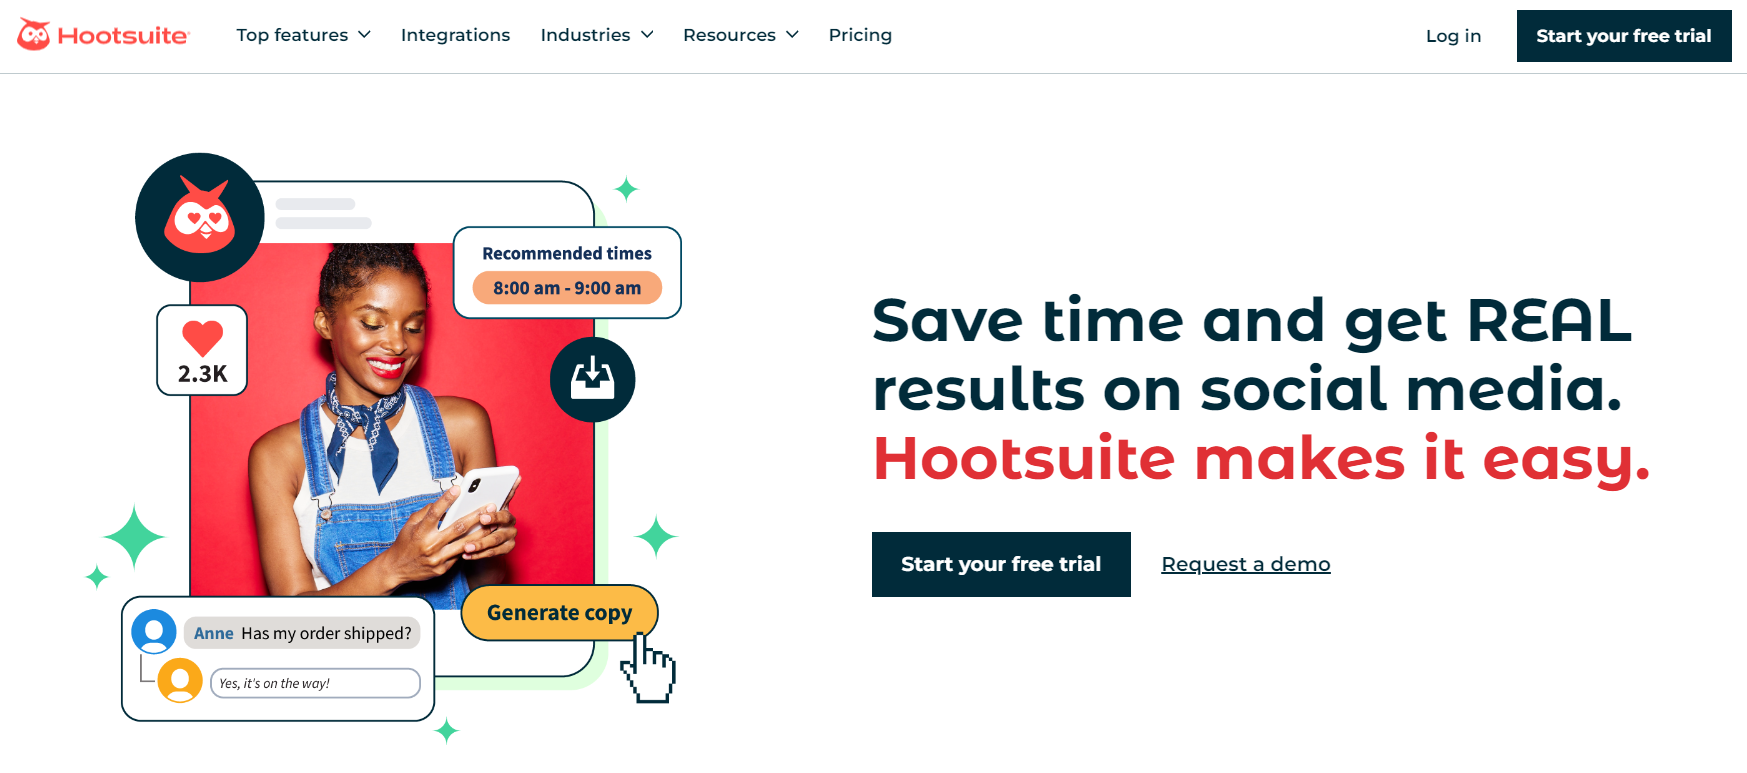 Hootsuite homepage - a top social media management platform.